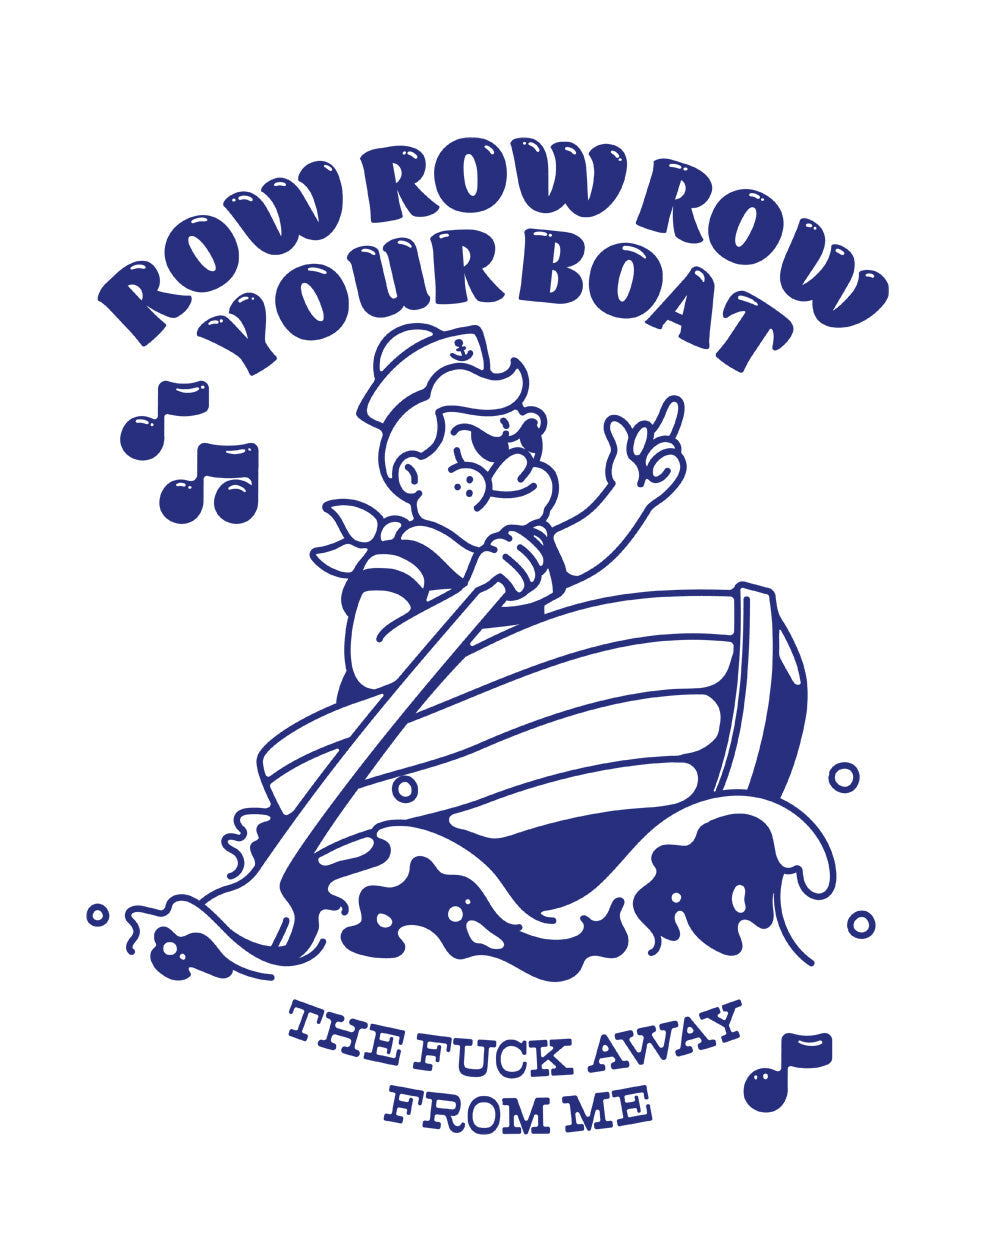 Row Row Row Rude Offensive Anti-Social Slogan Parody Spoof Cotton T-Shirt